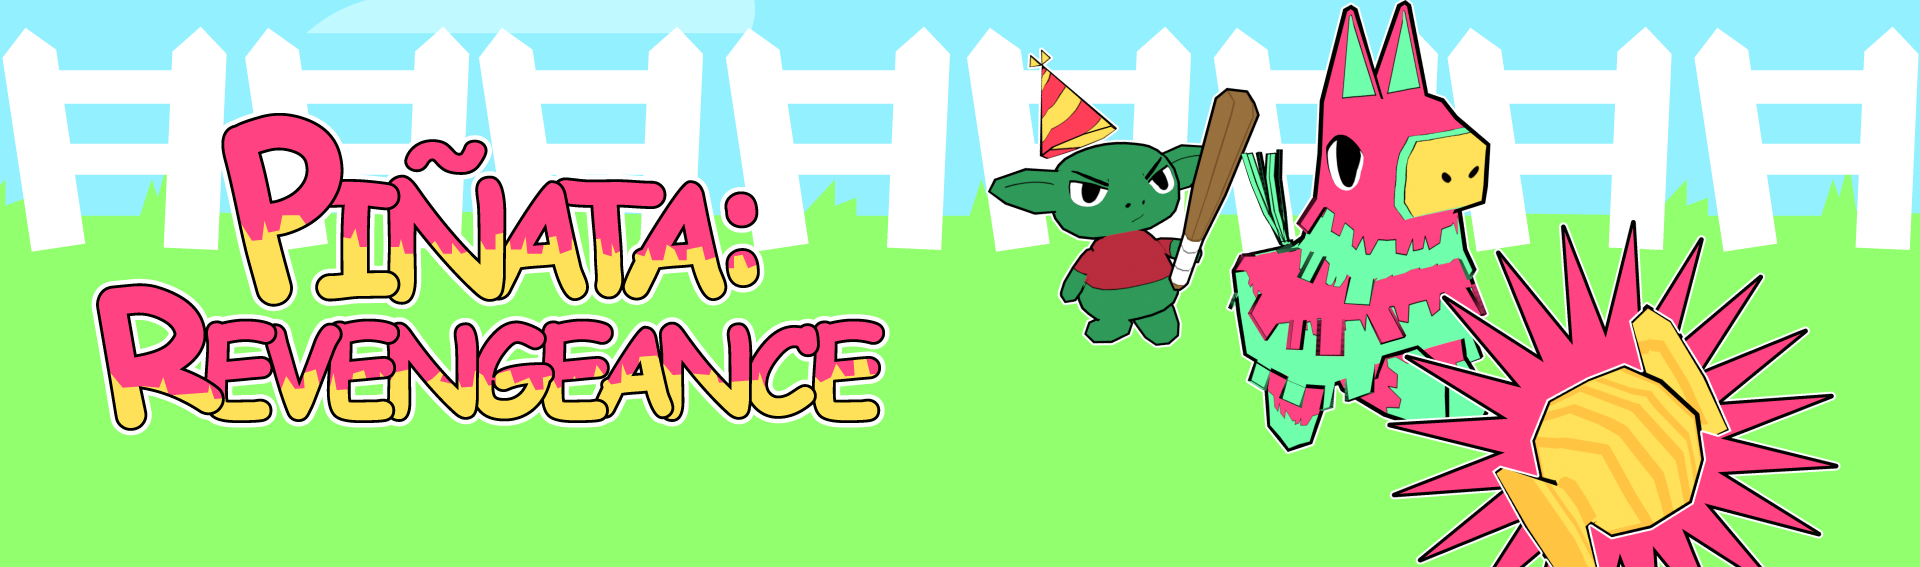 Piñata: Revengeance